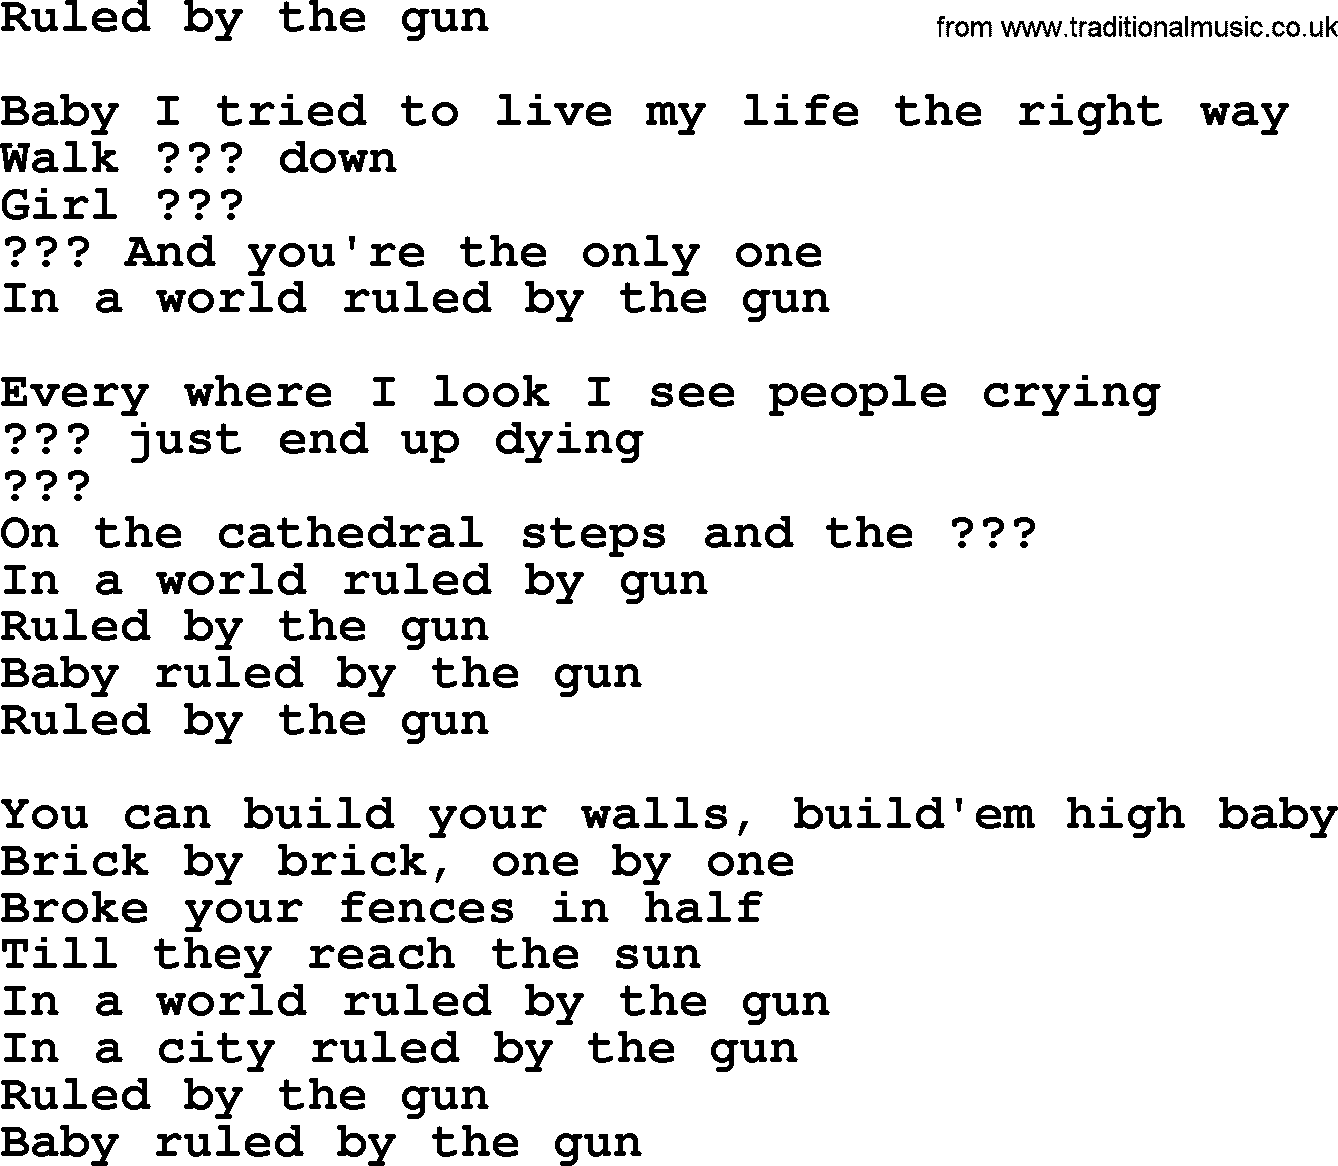 Bruce Springsteen song: Ruled By The Gun lyrics